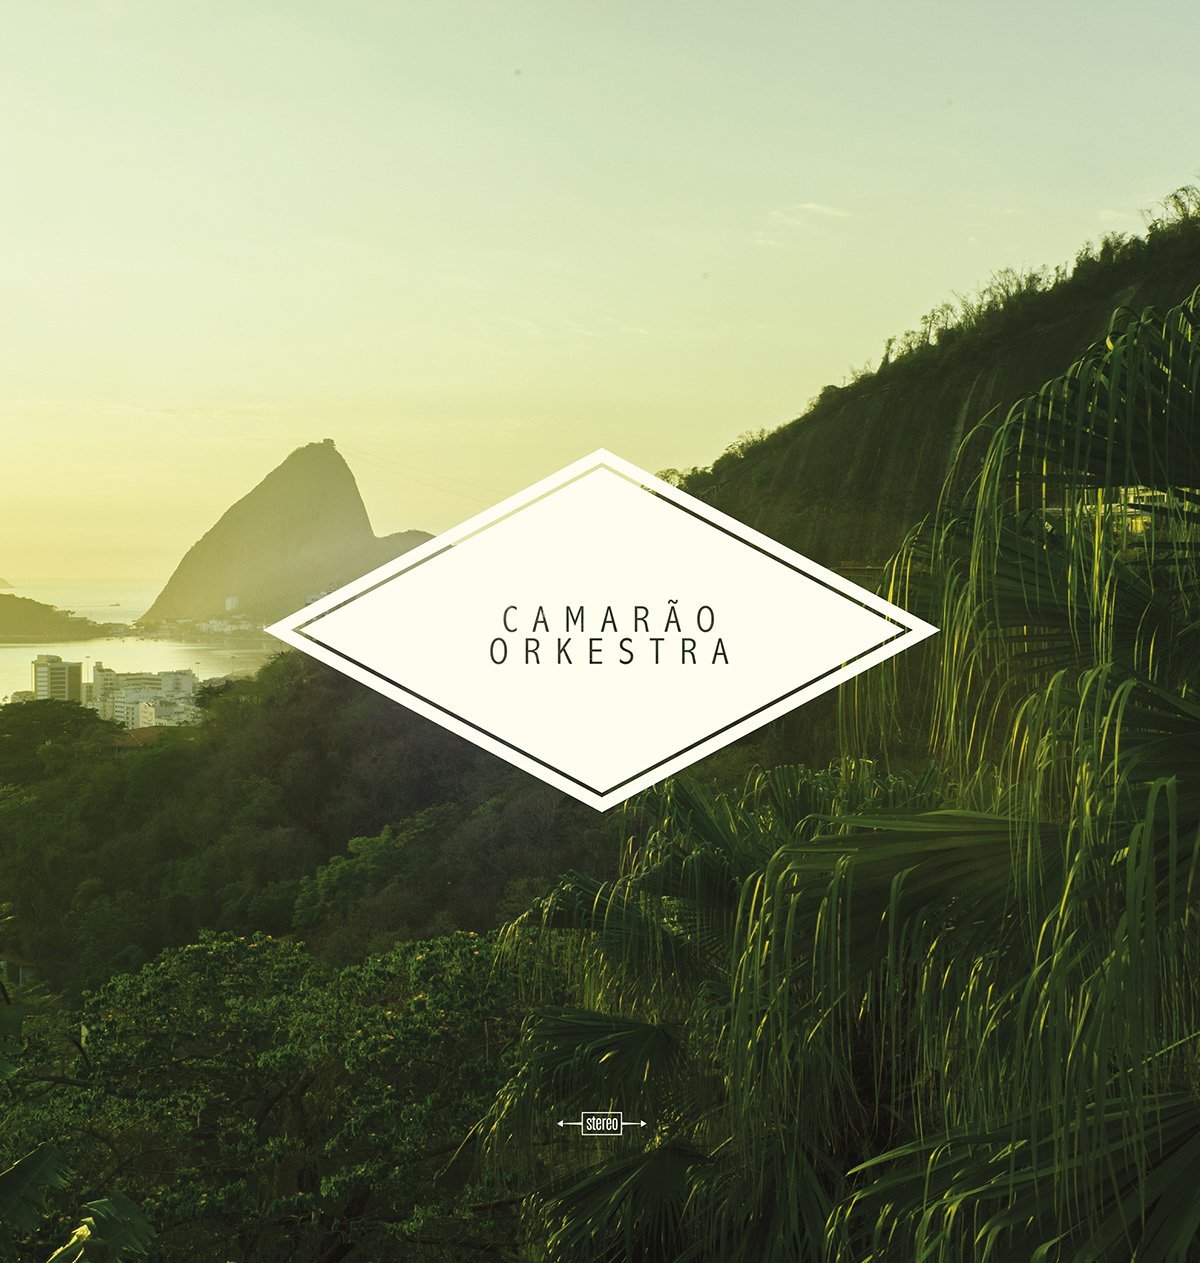 camarao orkestra rio Brazil LP cover flyer banner Adobe Portfolio